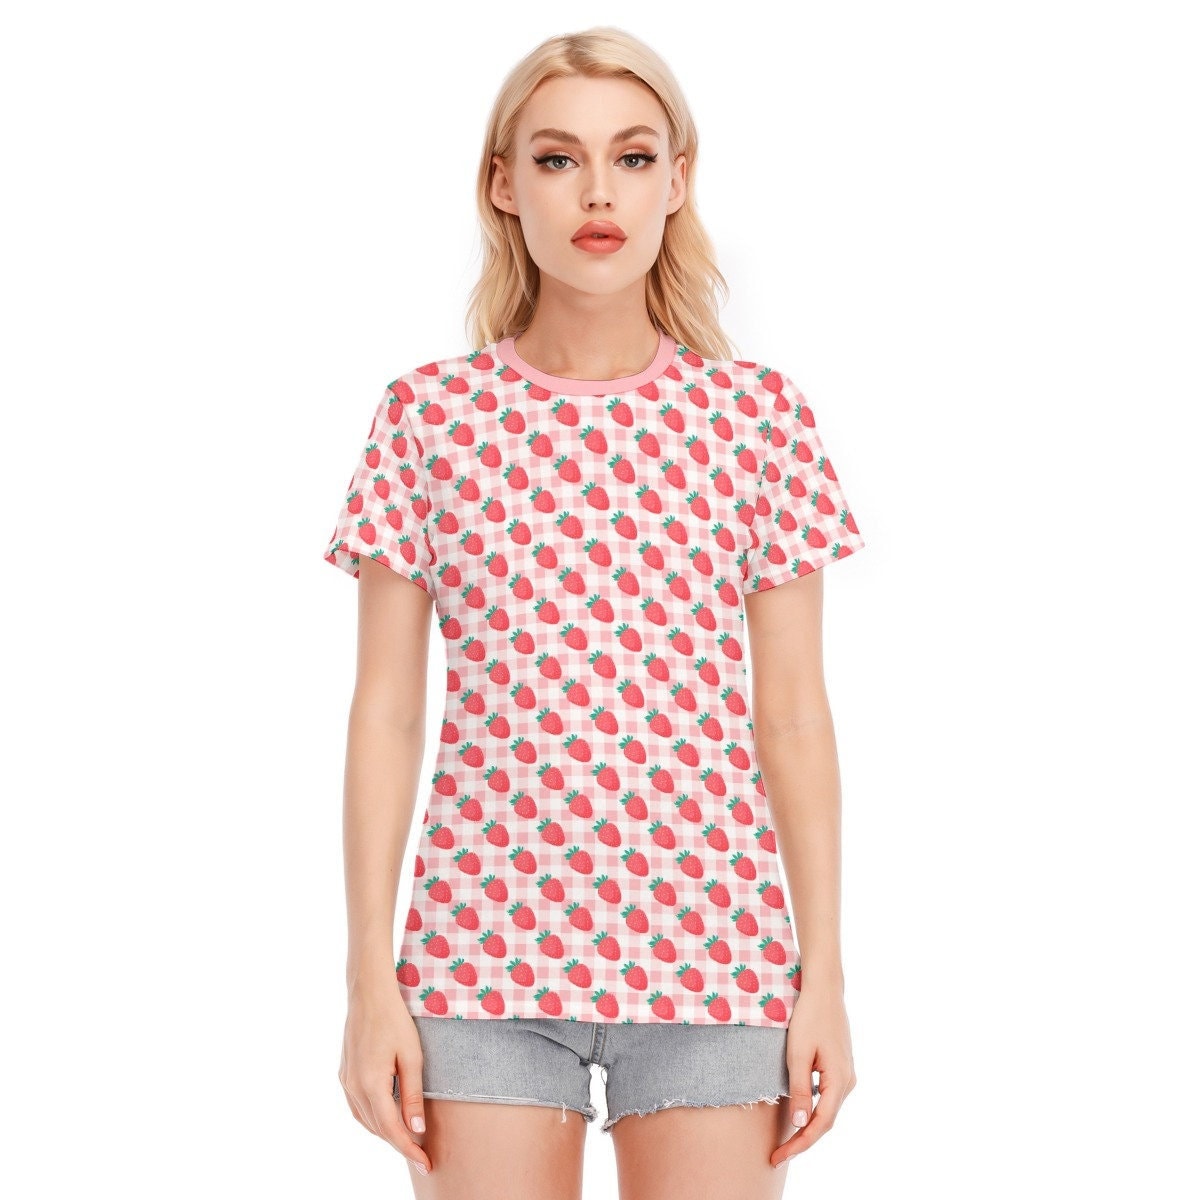 Women's tshirt, Strawberry T-shirt, Strawberry Tshirt, Strawberry Top, Pink Top, Pink gingham top,Women's Tops, Pink Top, Kawaii Top